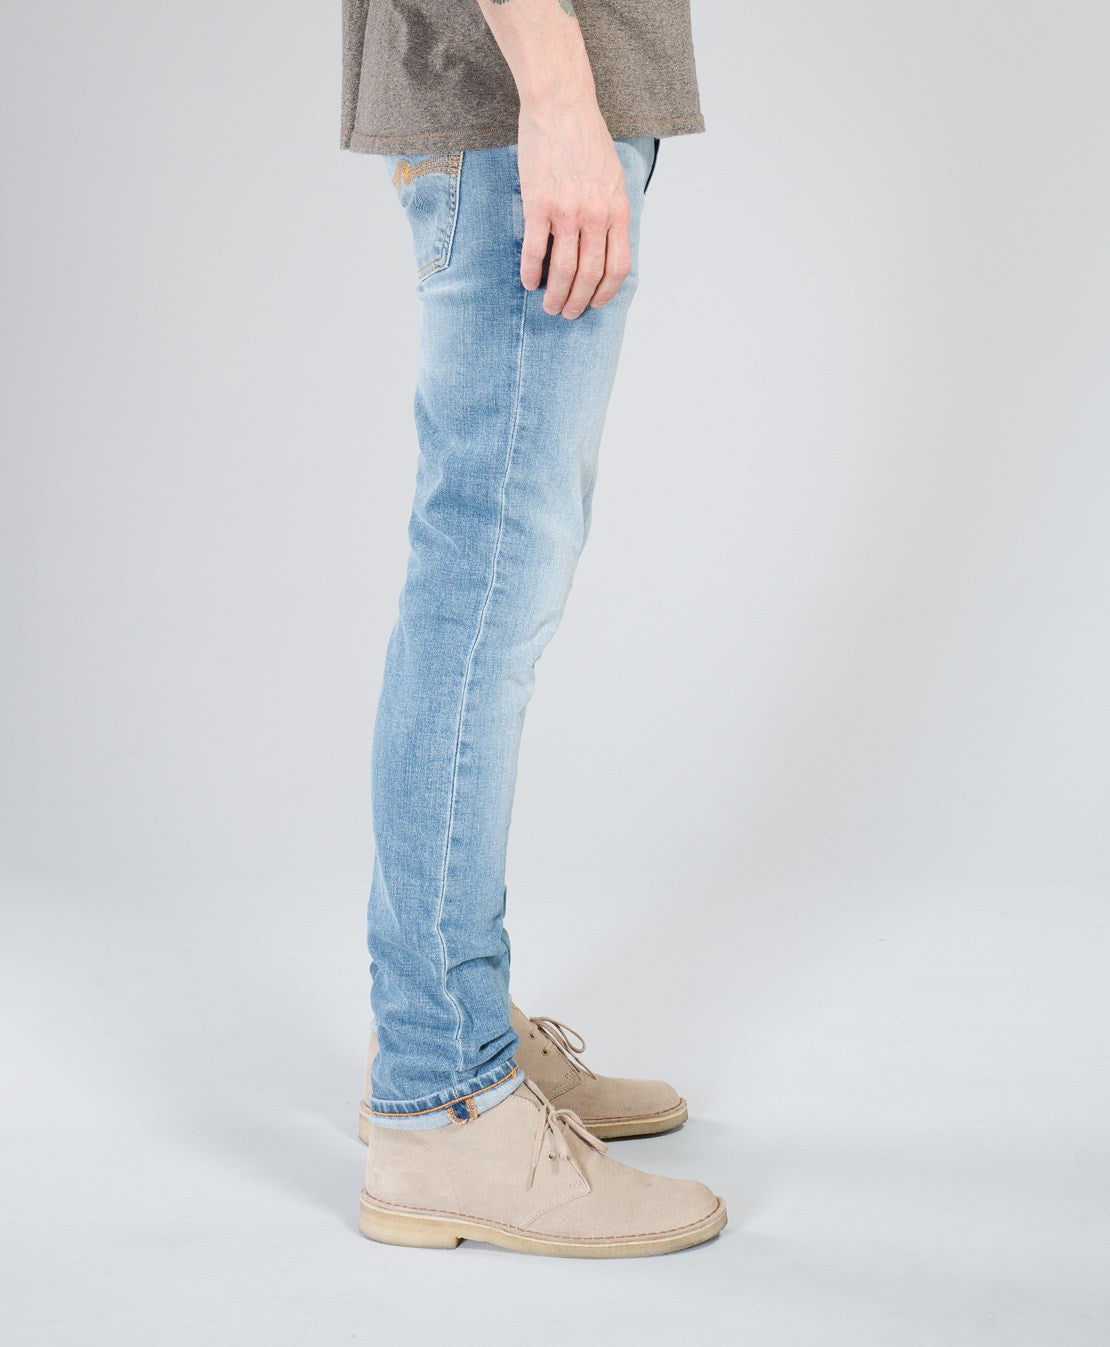 Ord rotation Arne Nudie Jeans Tight Long John Saltwater Indigo - Mildblend Supply Co